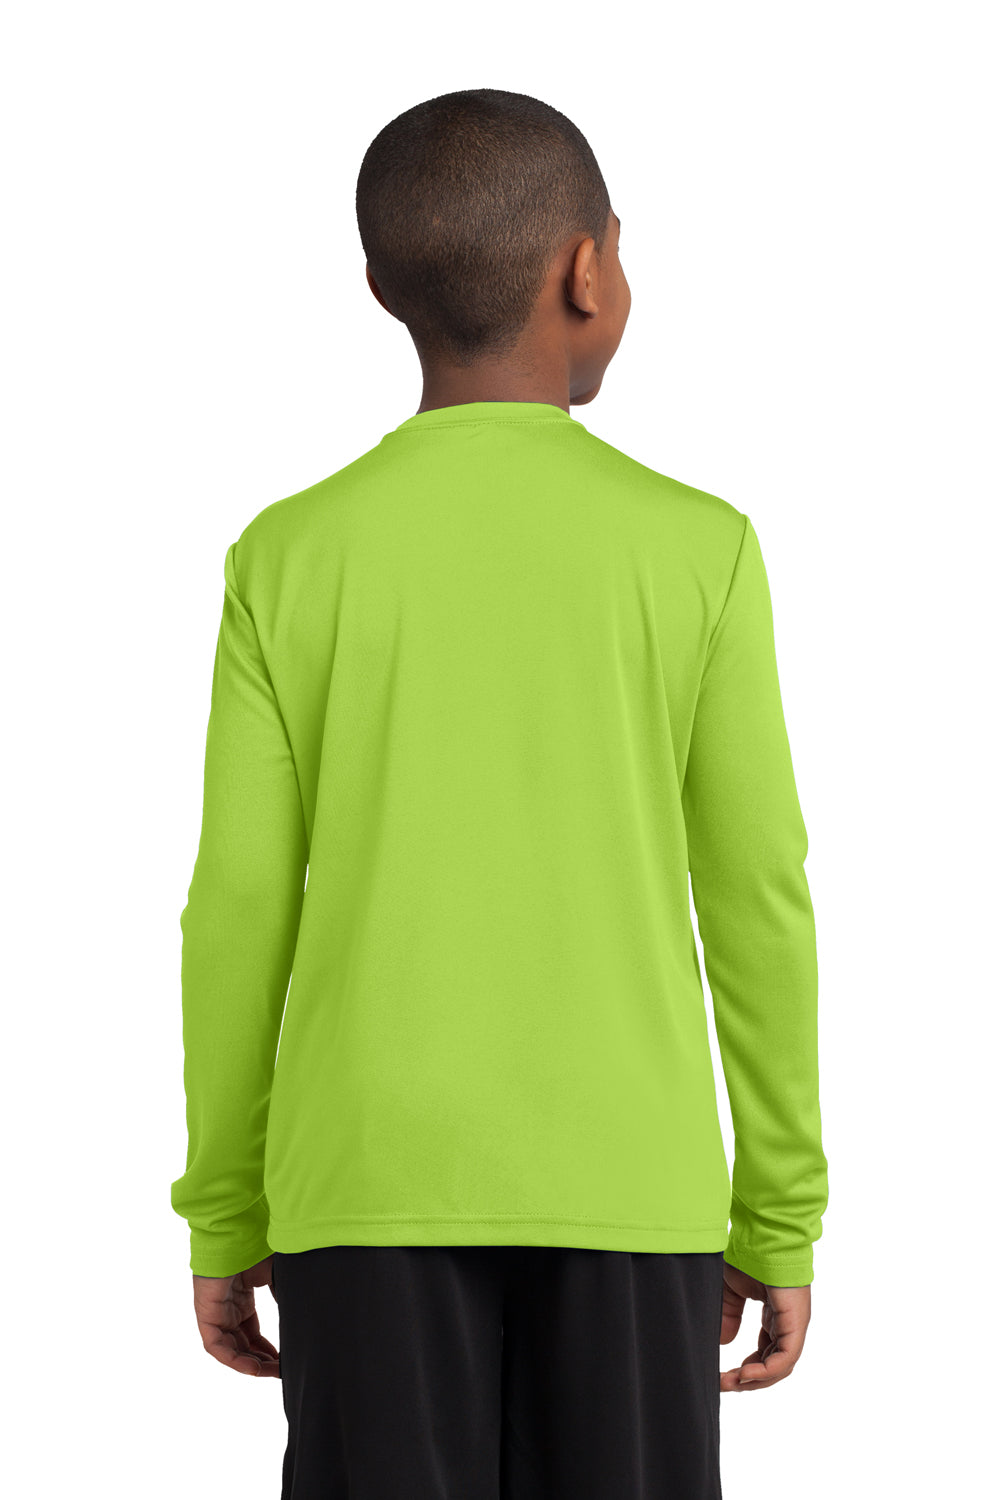 Sport-Tek YST350LS Youth Competitor Moisture Wicking Long Sleeve Crewneck T-Shirt Lime Green Back